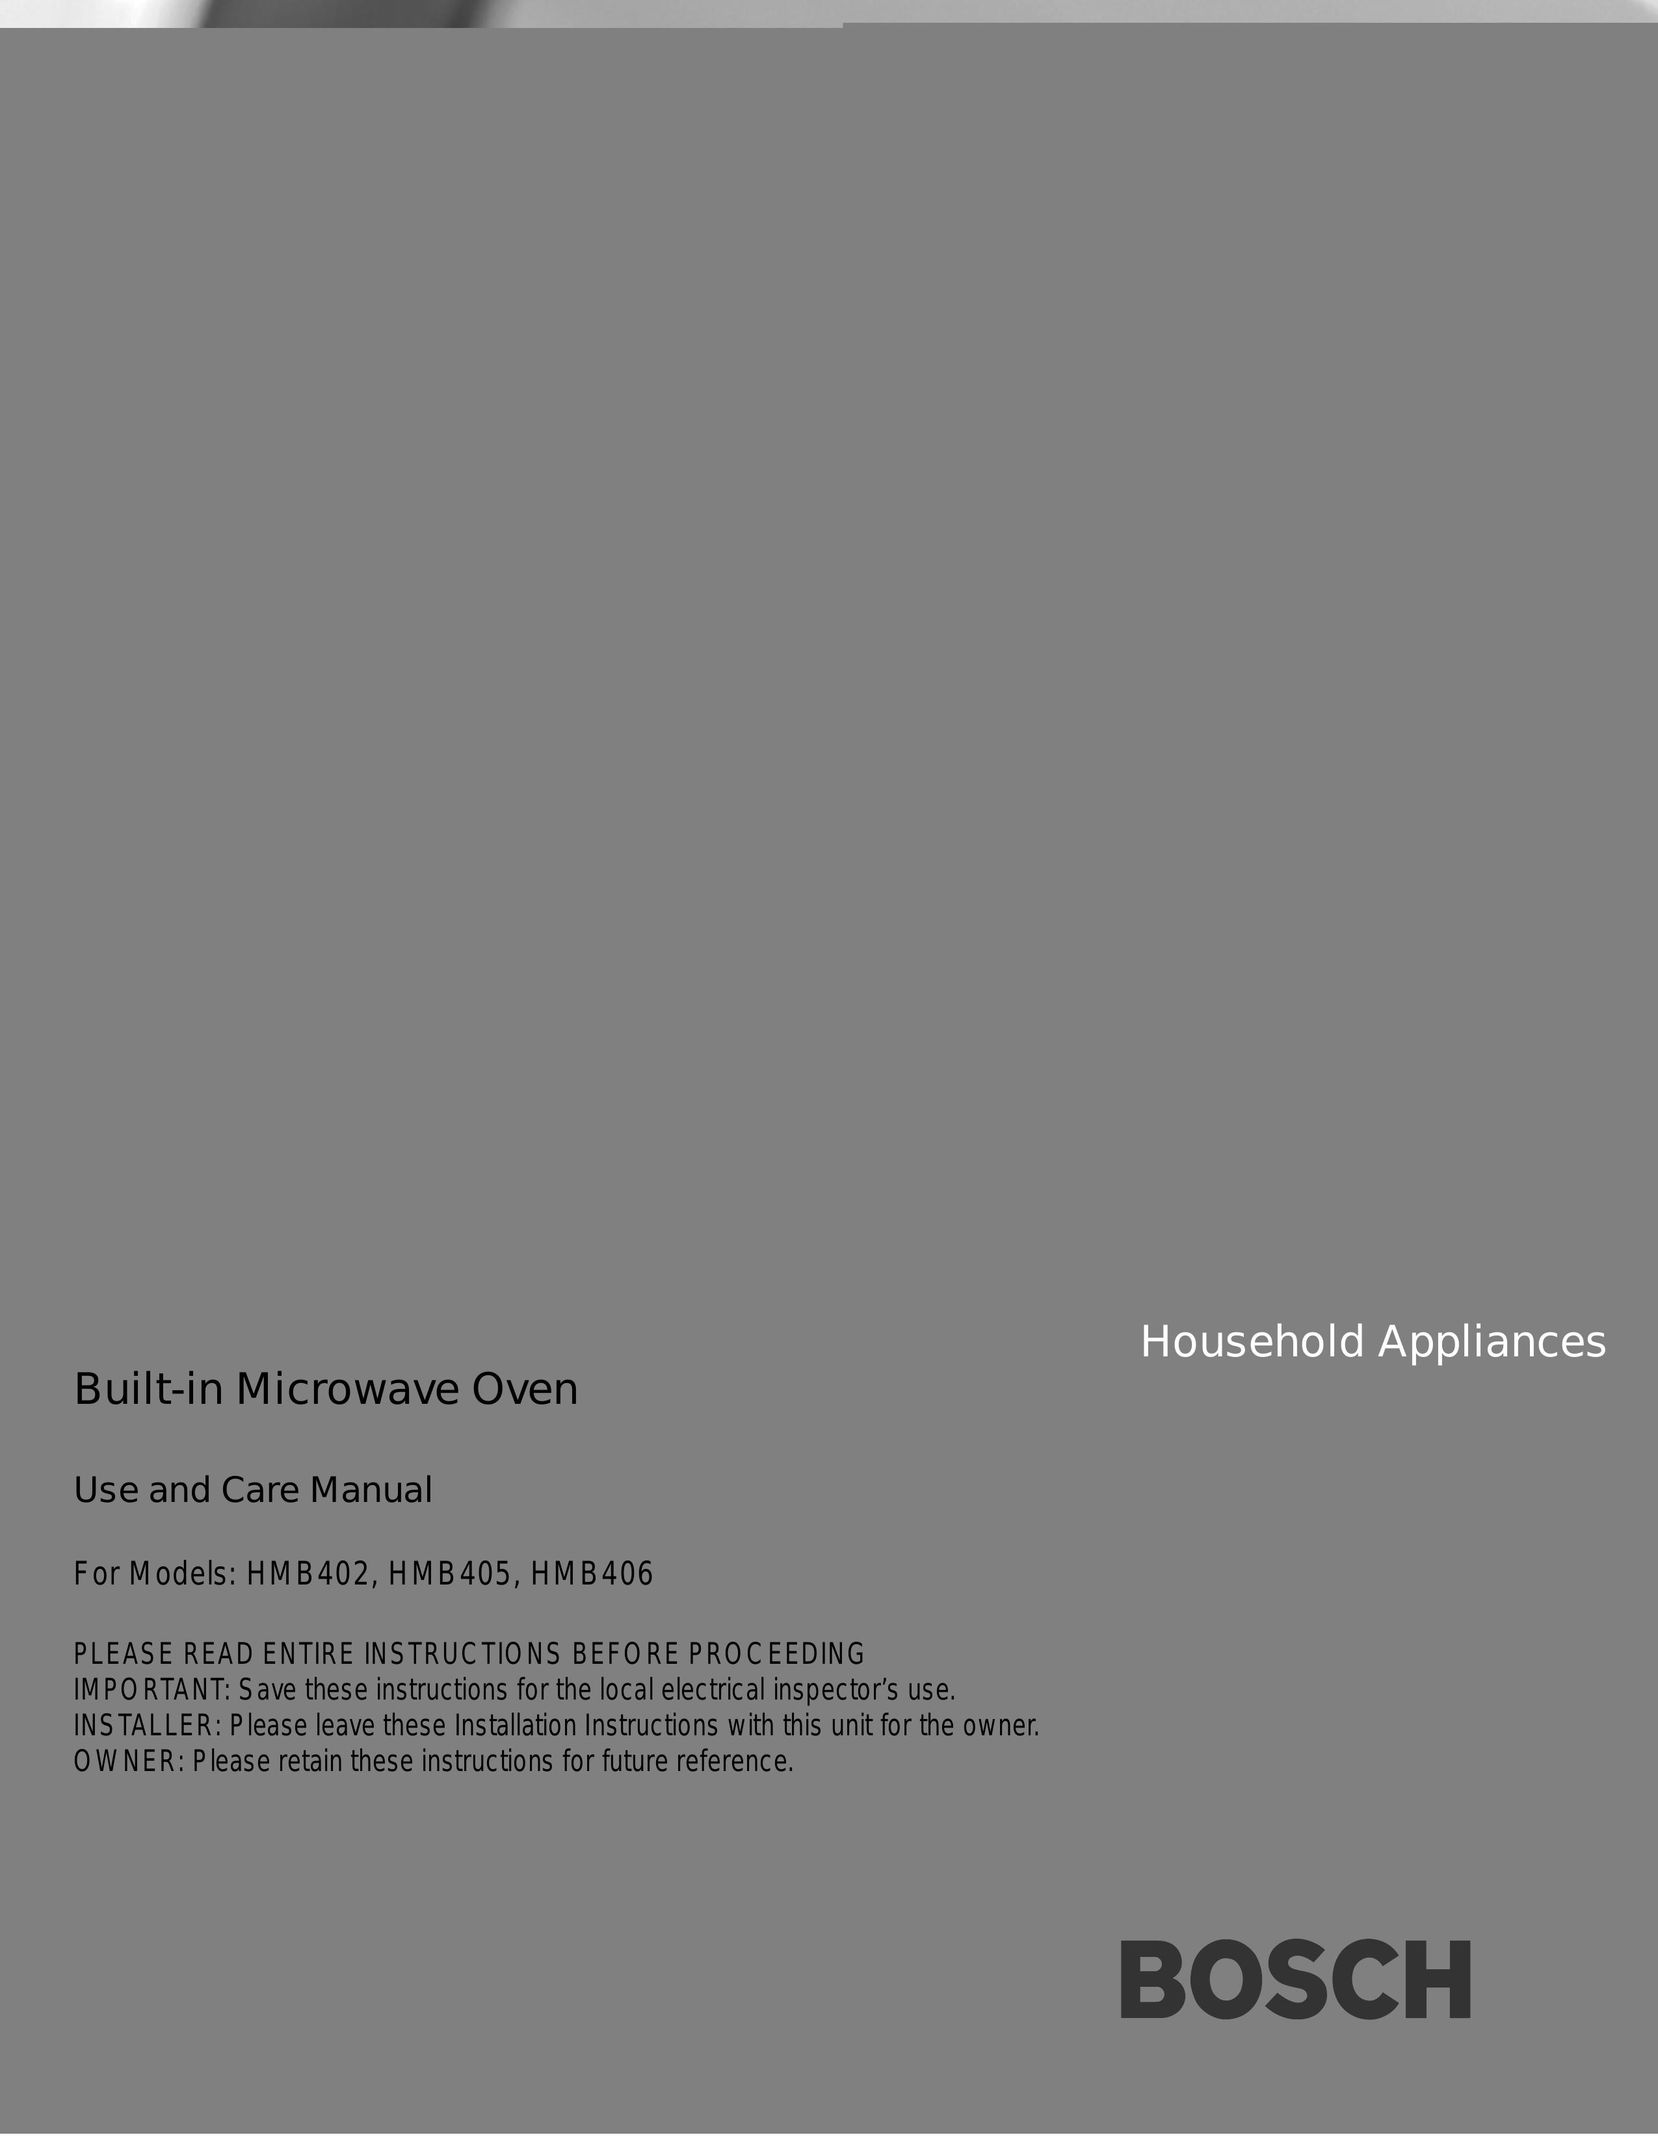 Bosch Appliances HMB405 Microwave Oven User Manual